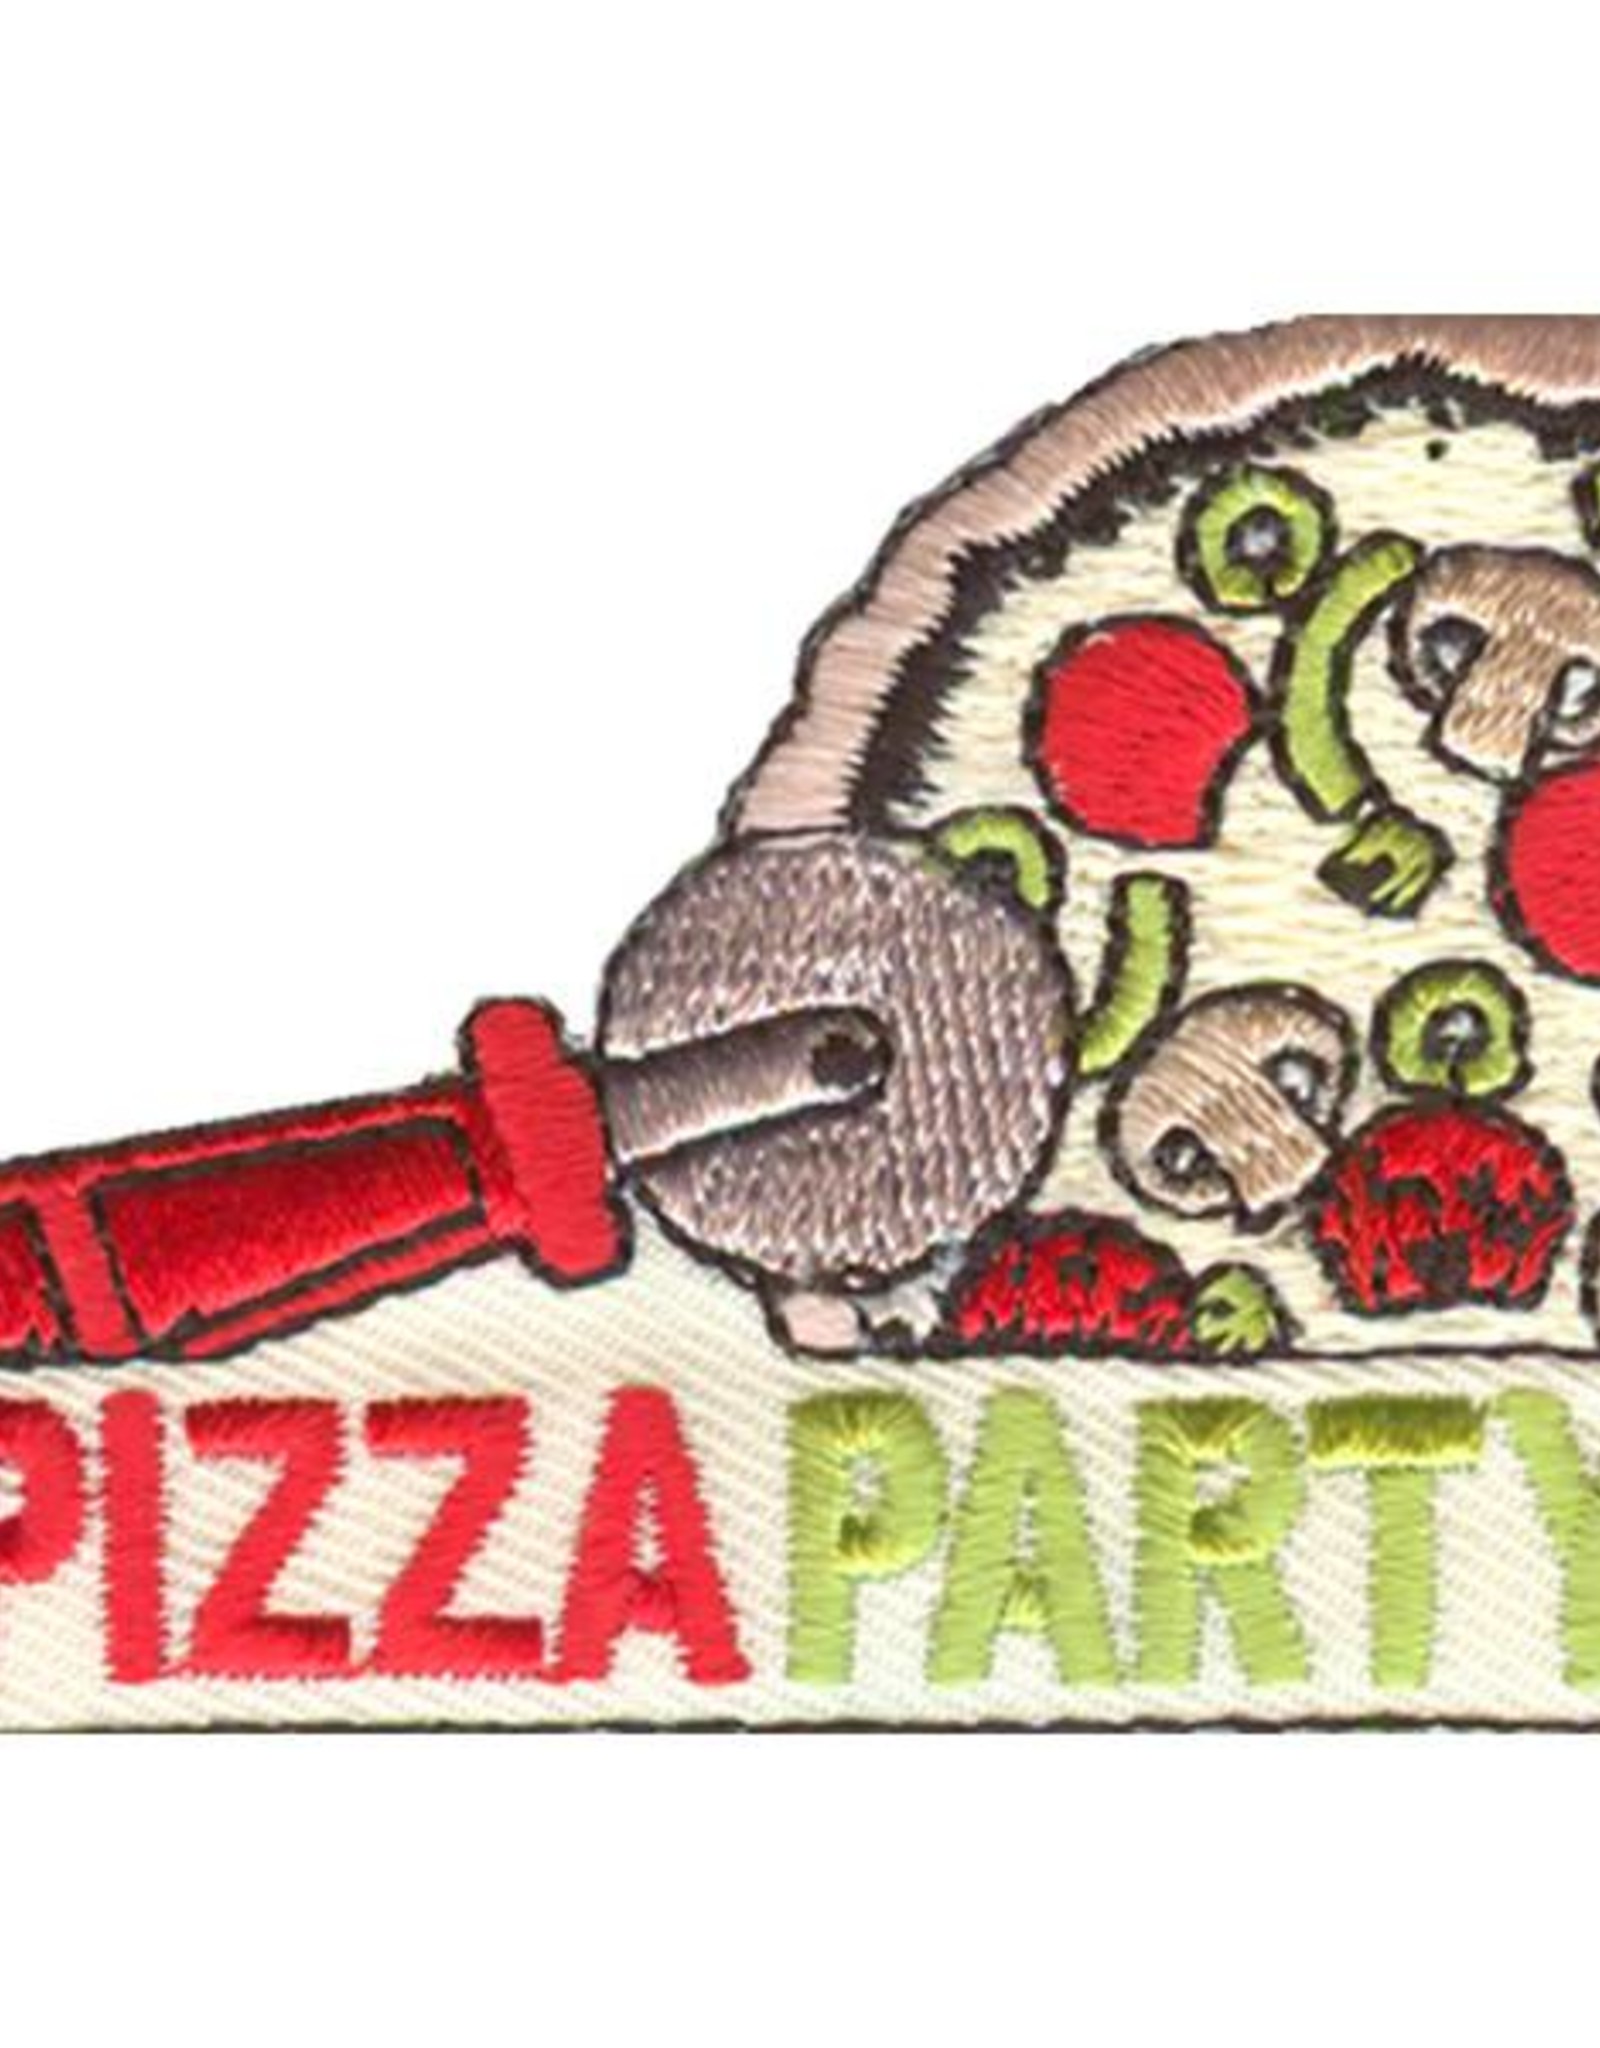 Advantage Emblem & Screen Prnt *Pizza Party Fun Patch